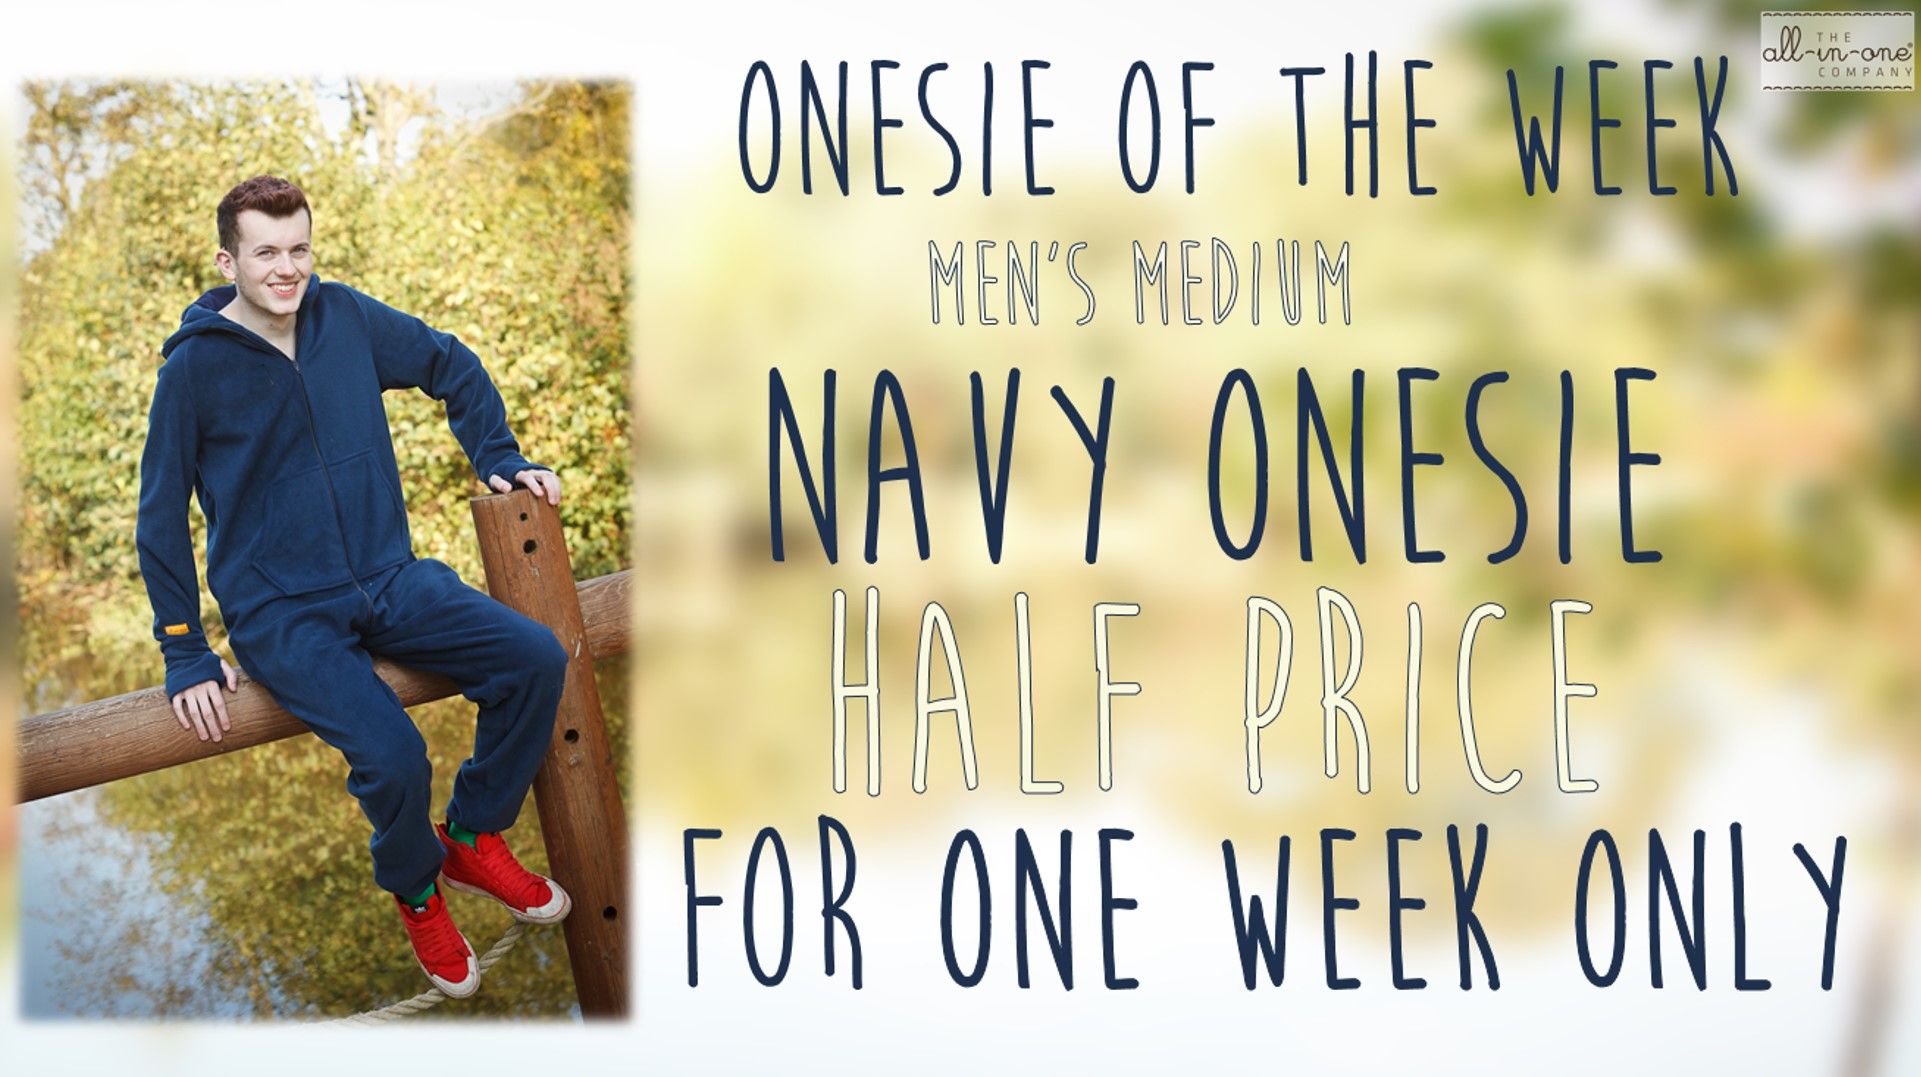 Navy Onesie